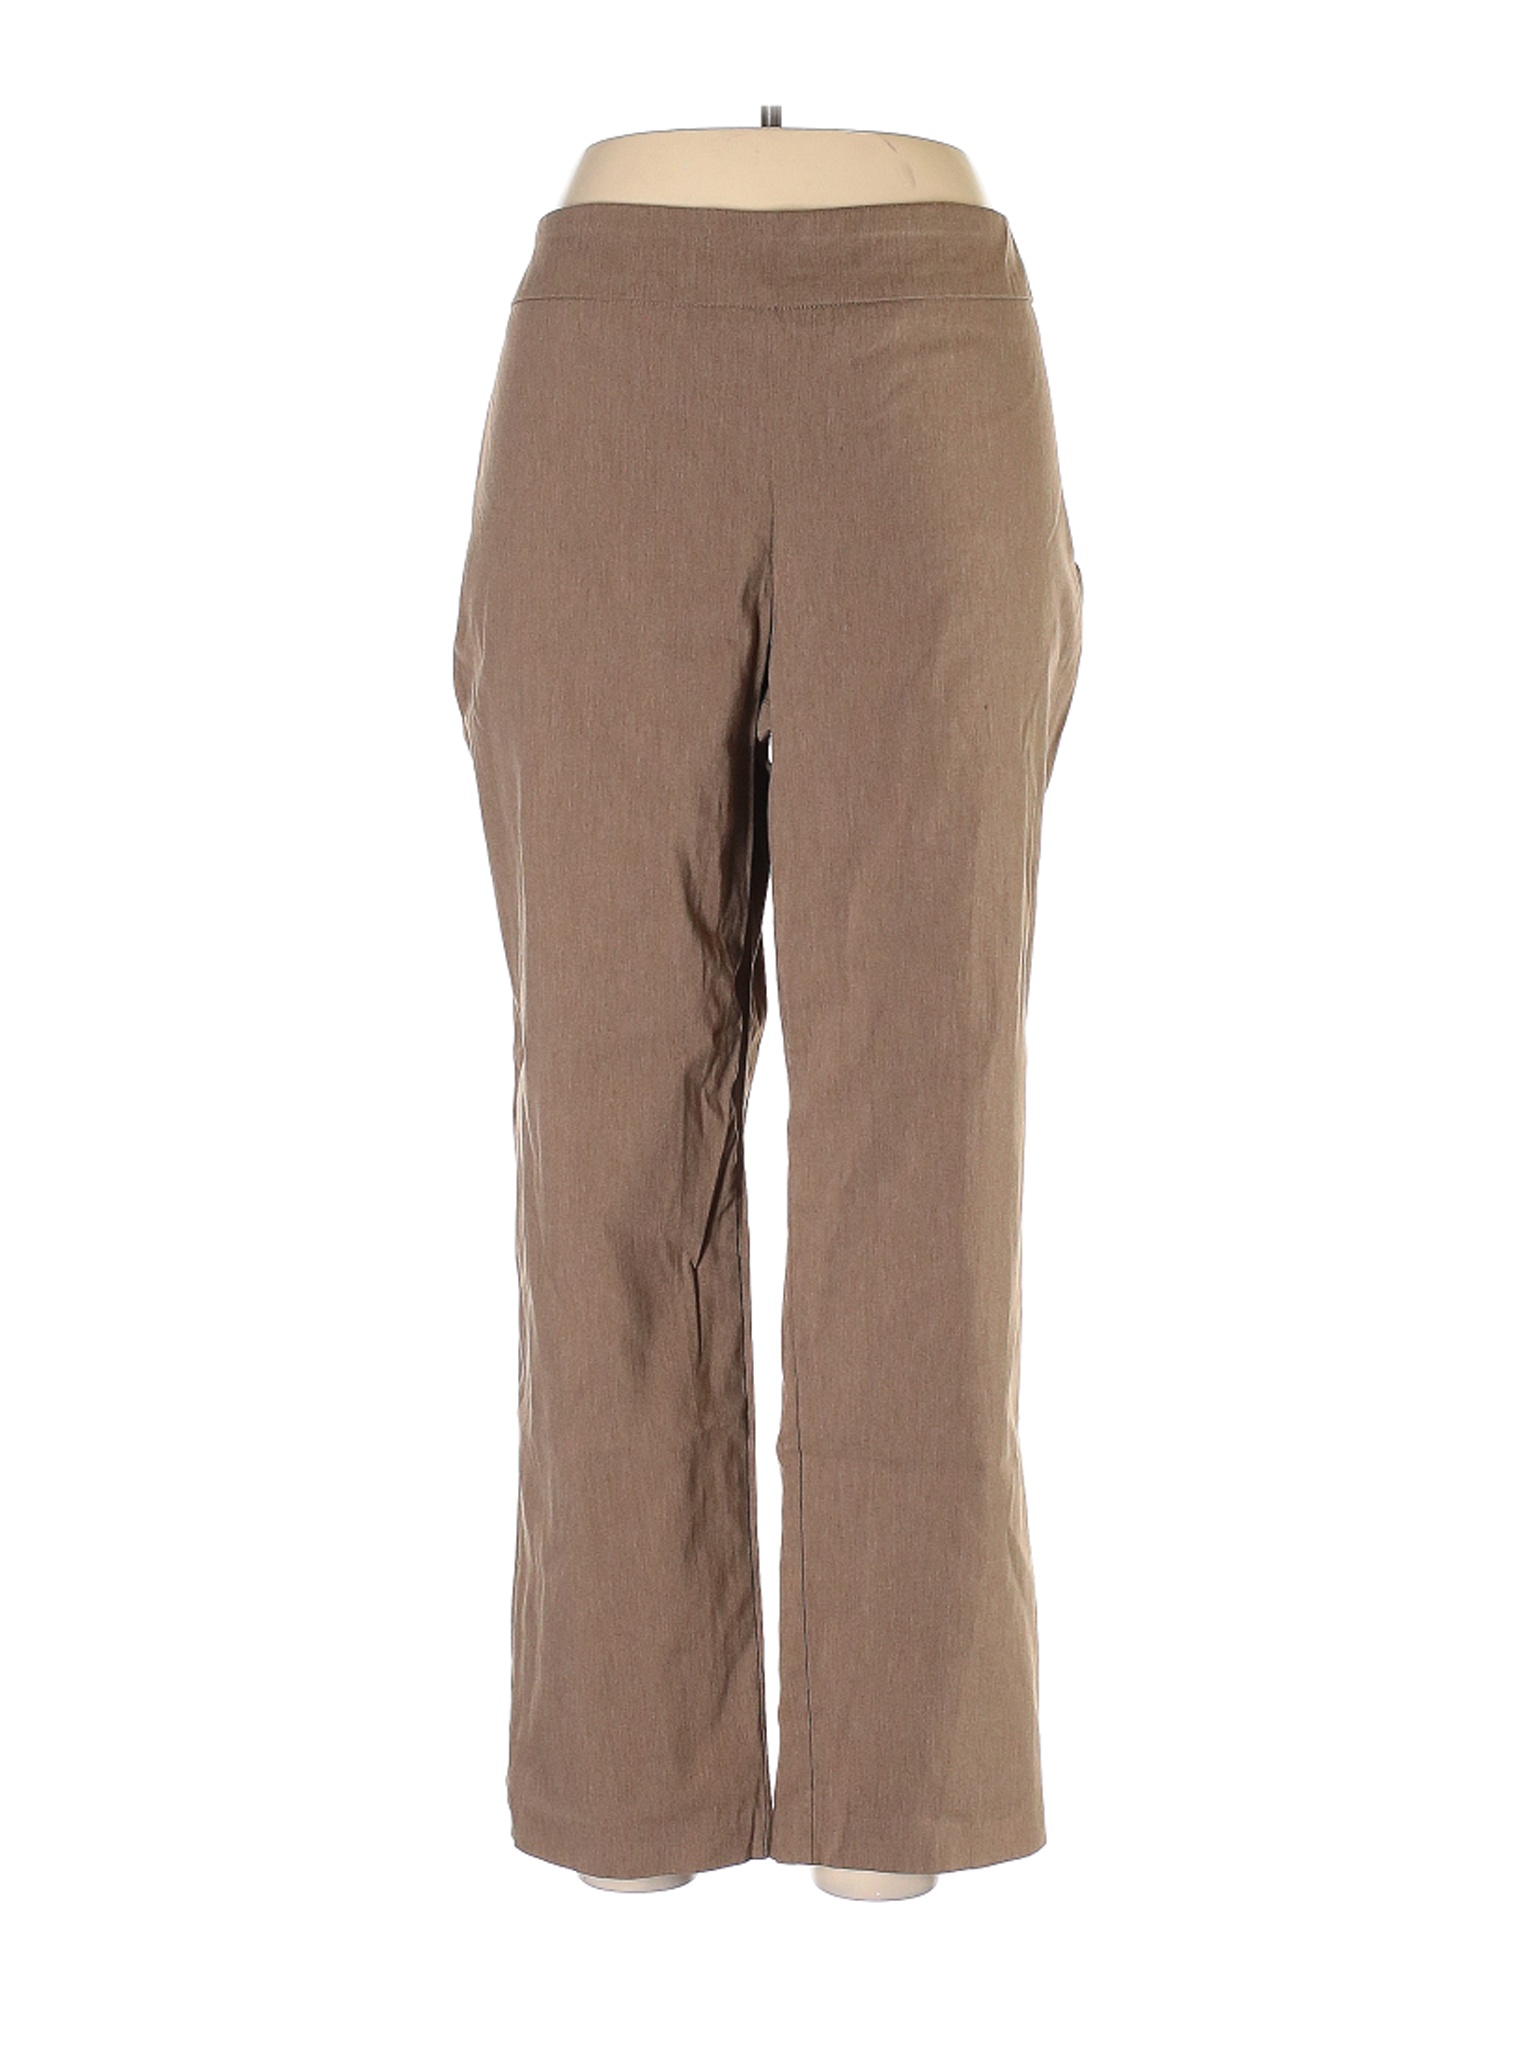 Dana Buchman Women Brown Casual Pants XL | eBay